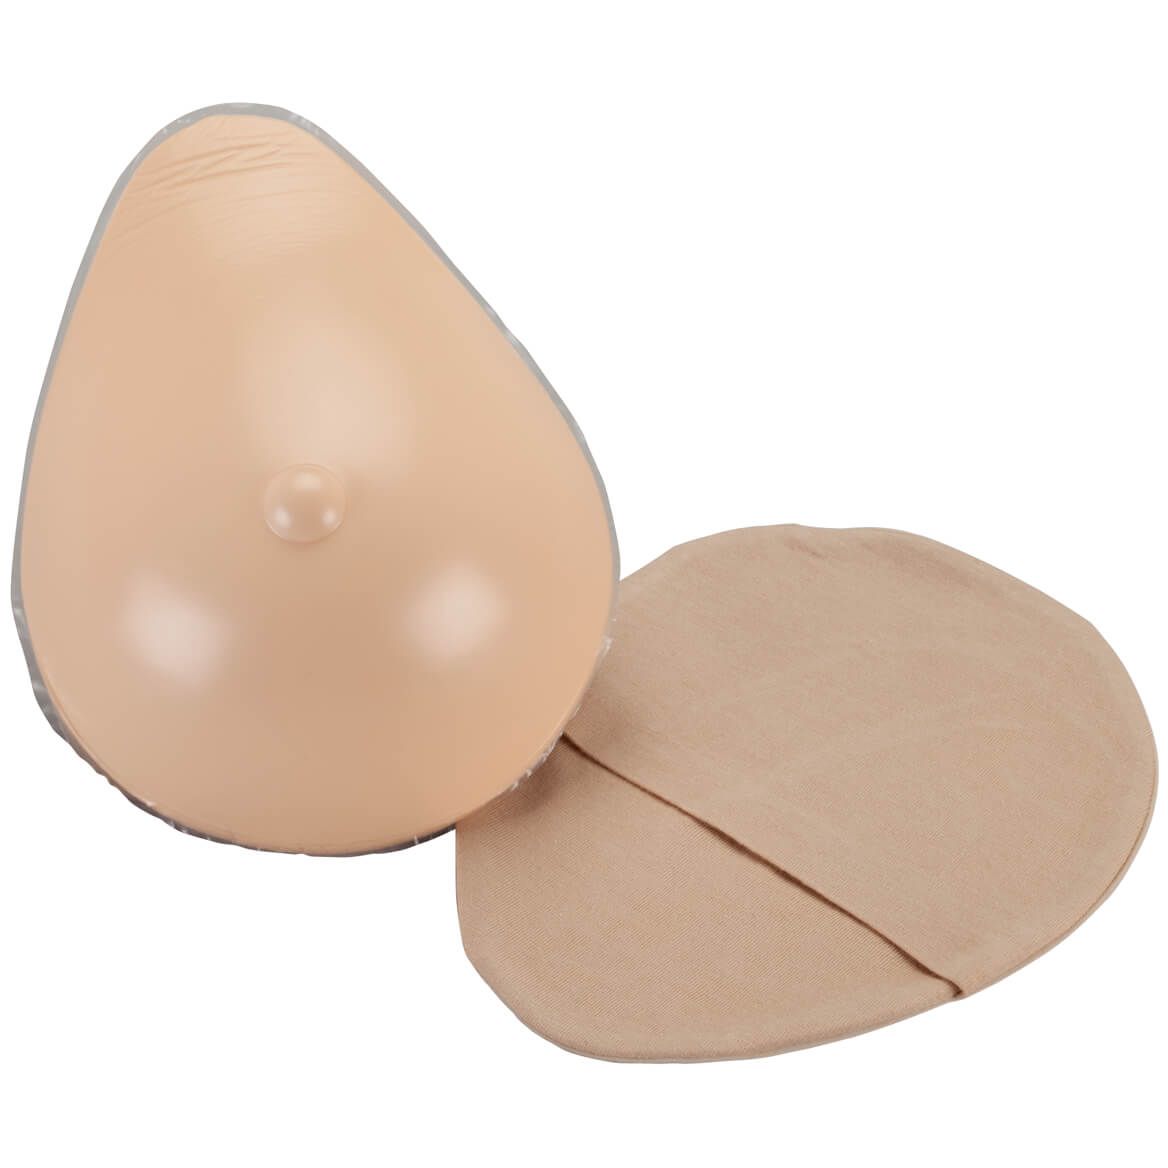 Lightweight Silicone Teardrop Breast Form, 1 Form + '-' + 360139